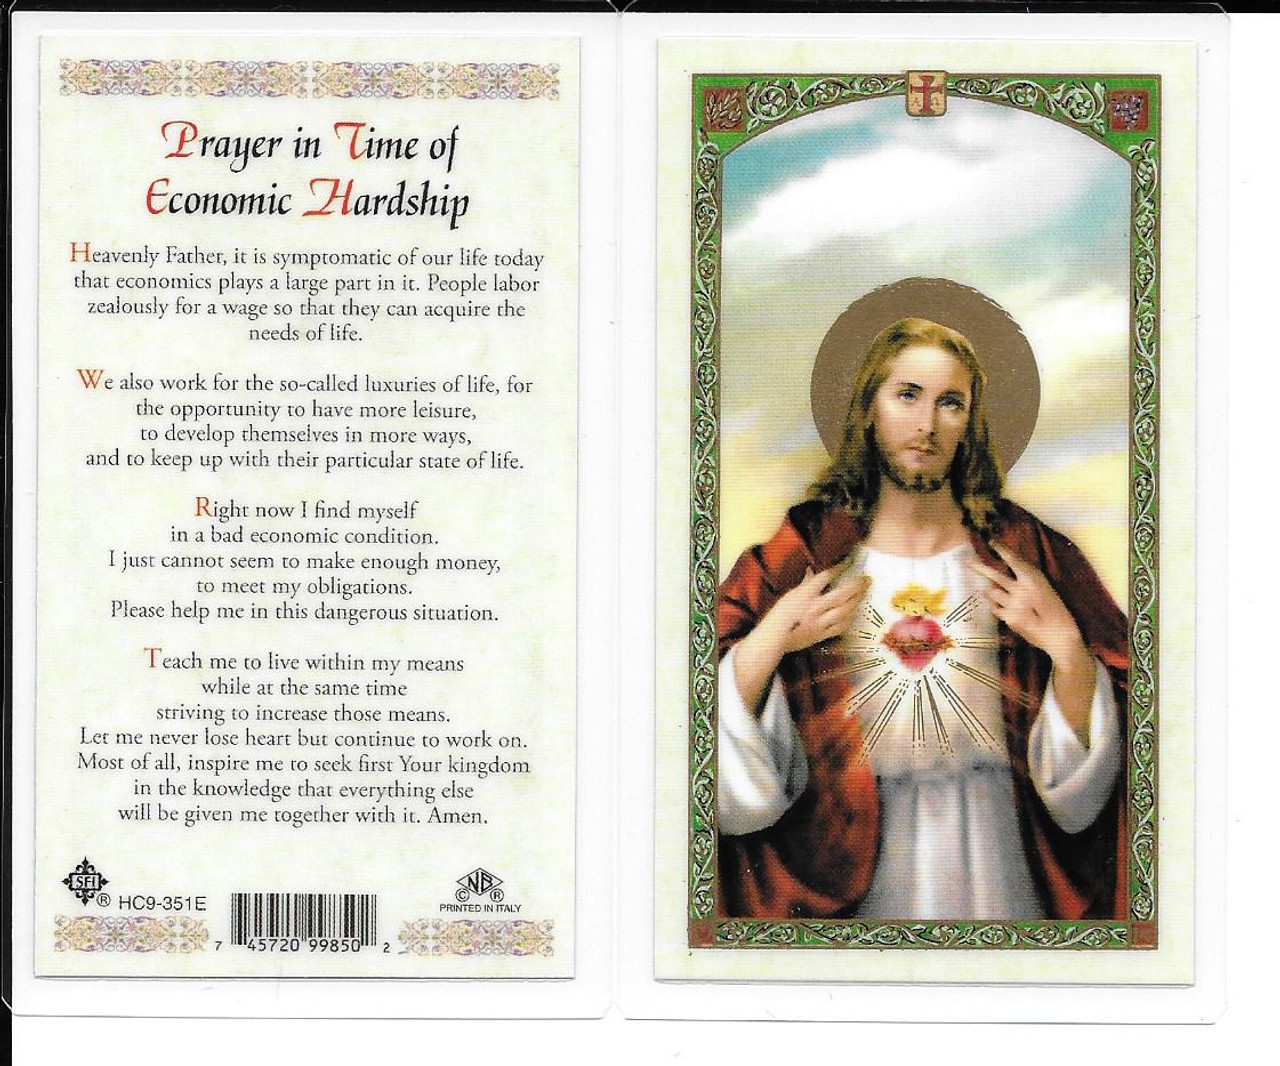 Laminated Prayer Card “Prayer in time of Economic Hardship”.